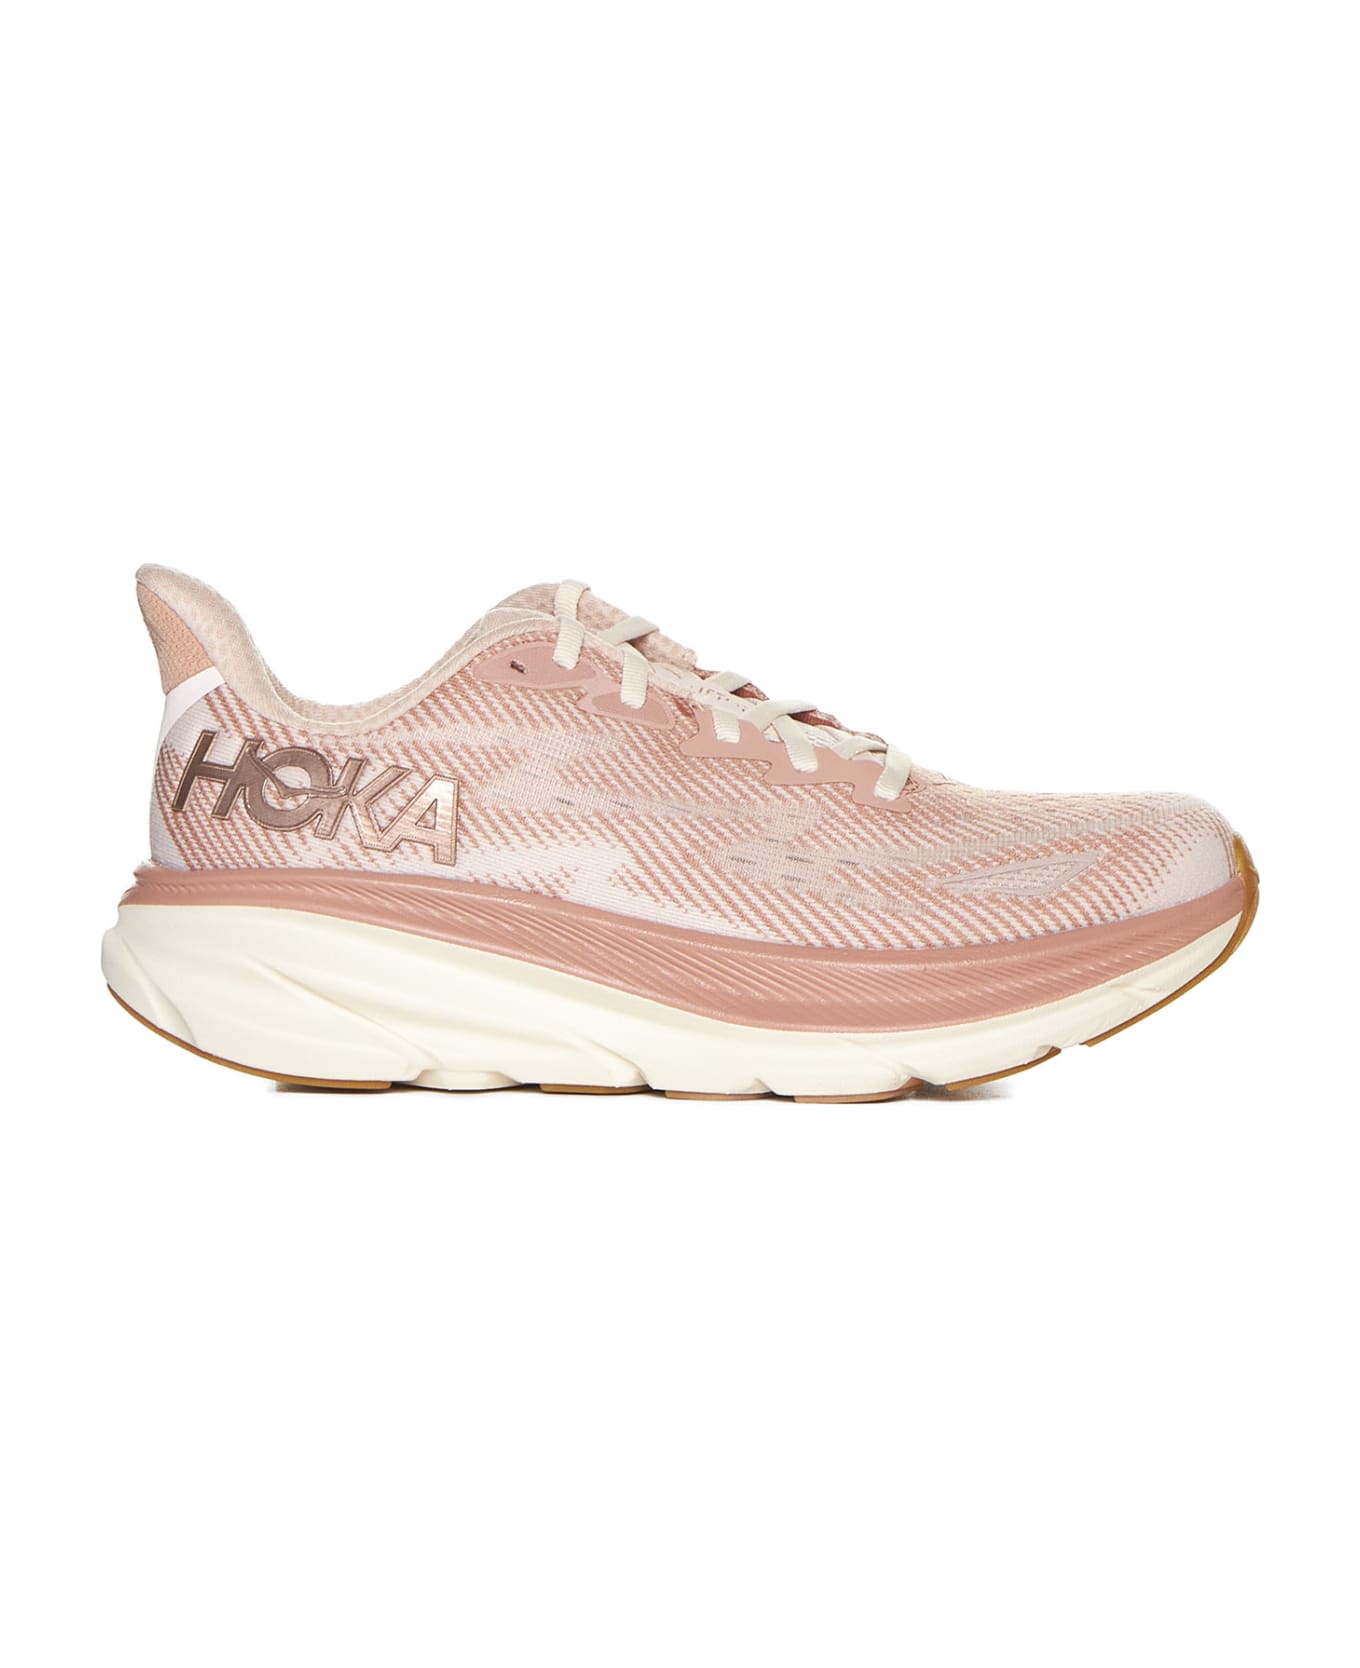 Hoka Sneakers - Sandstone / cream スニーカー